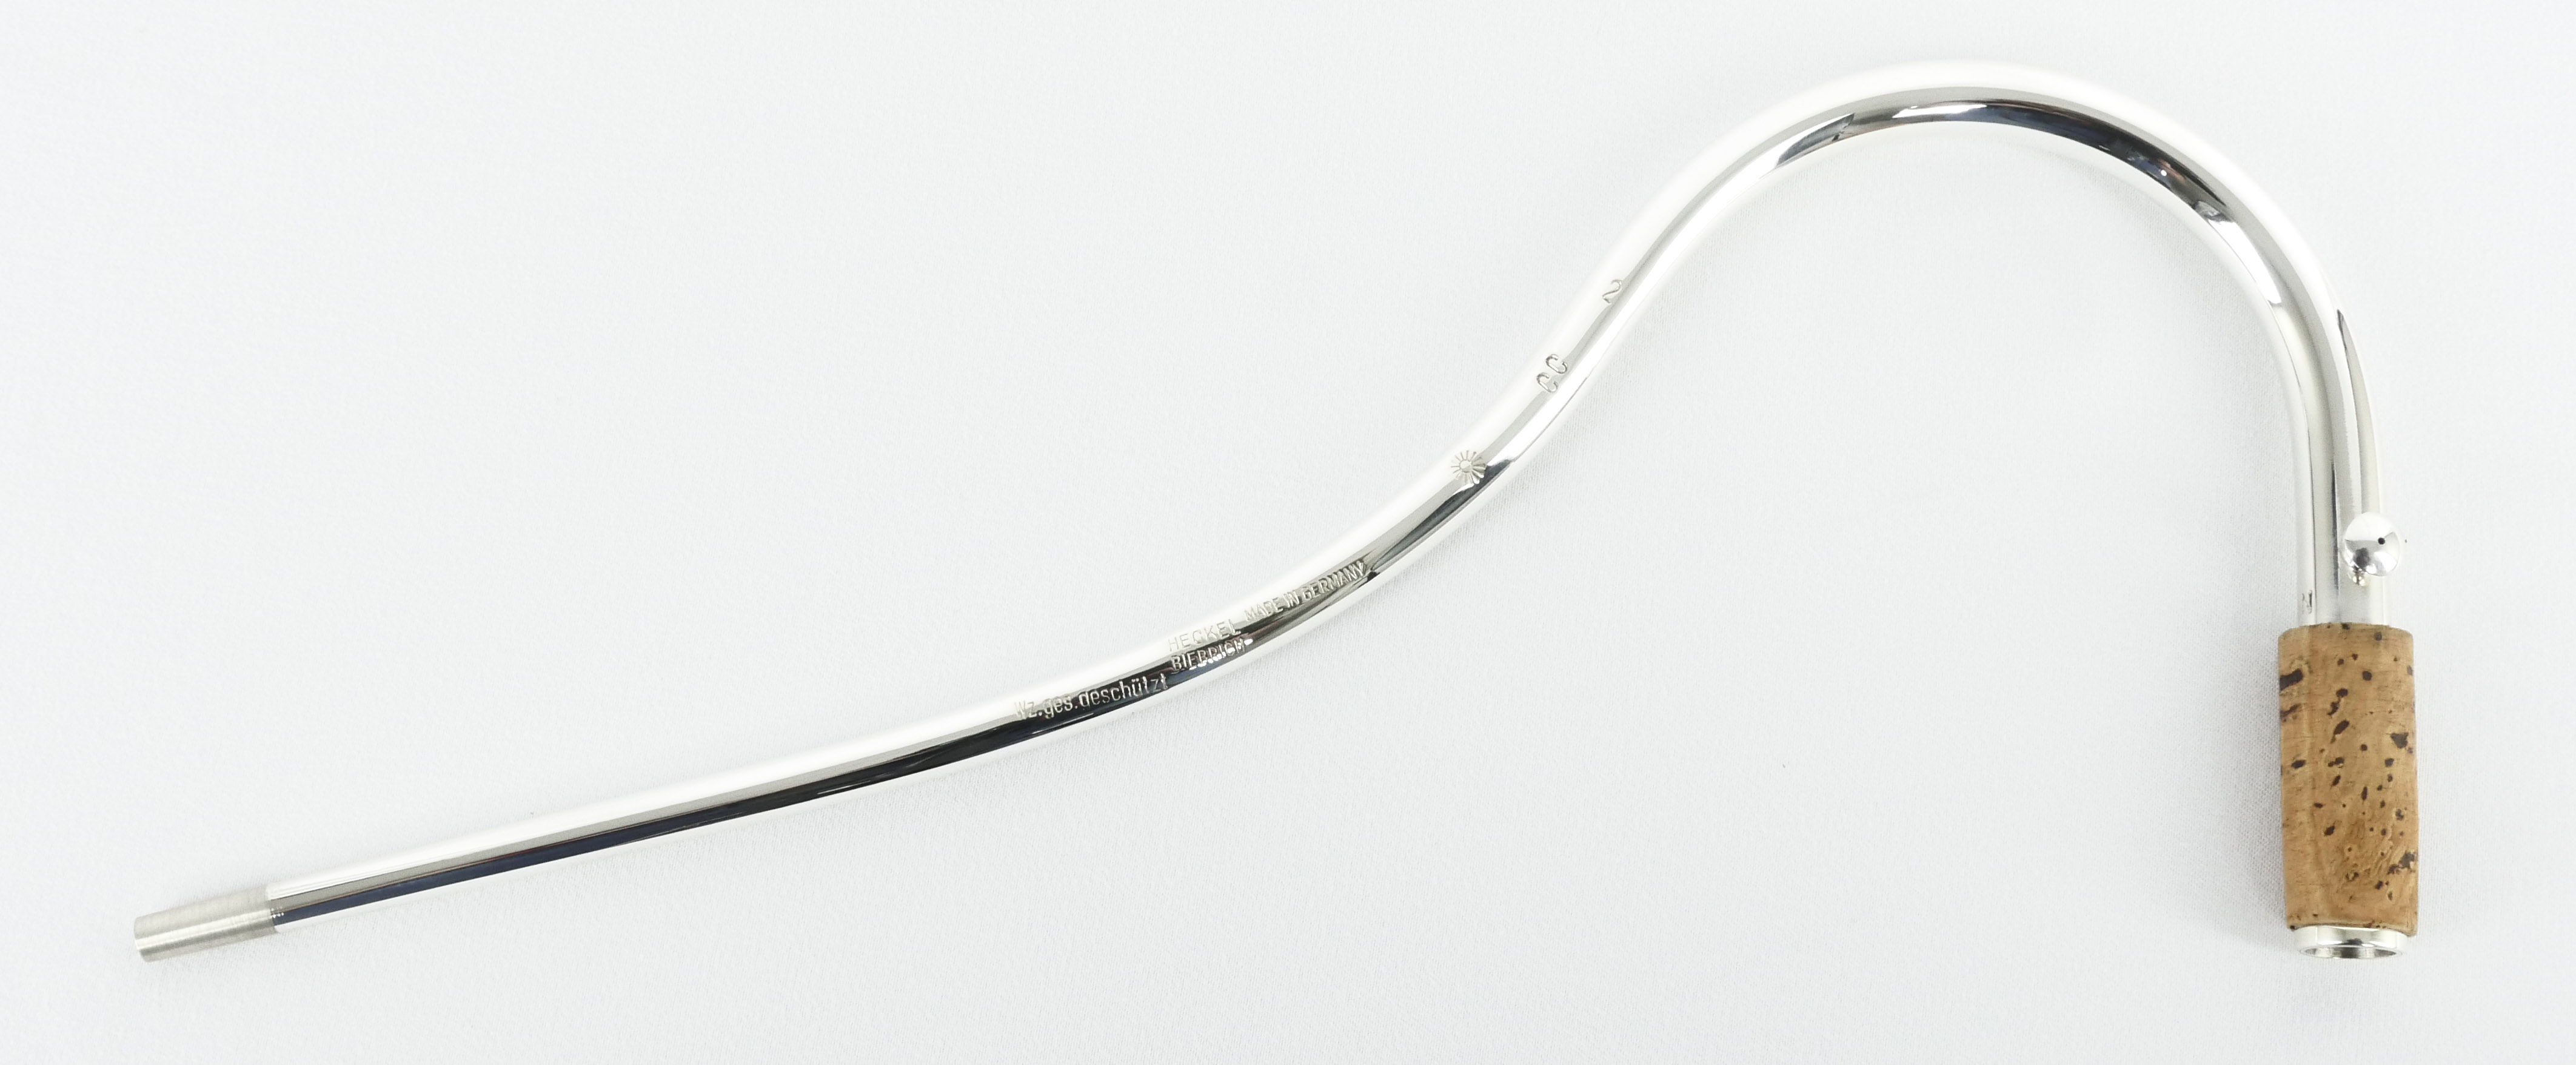 NEW Leo Interchangeable & Reversible Bracelet - MADE TO ORDER – Owen&Savary